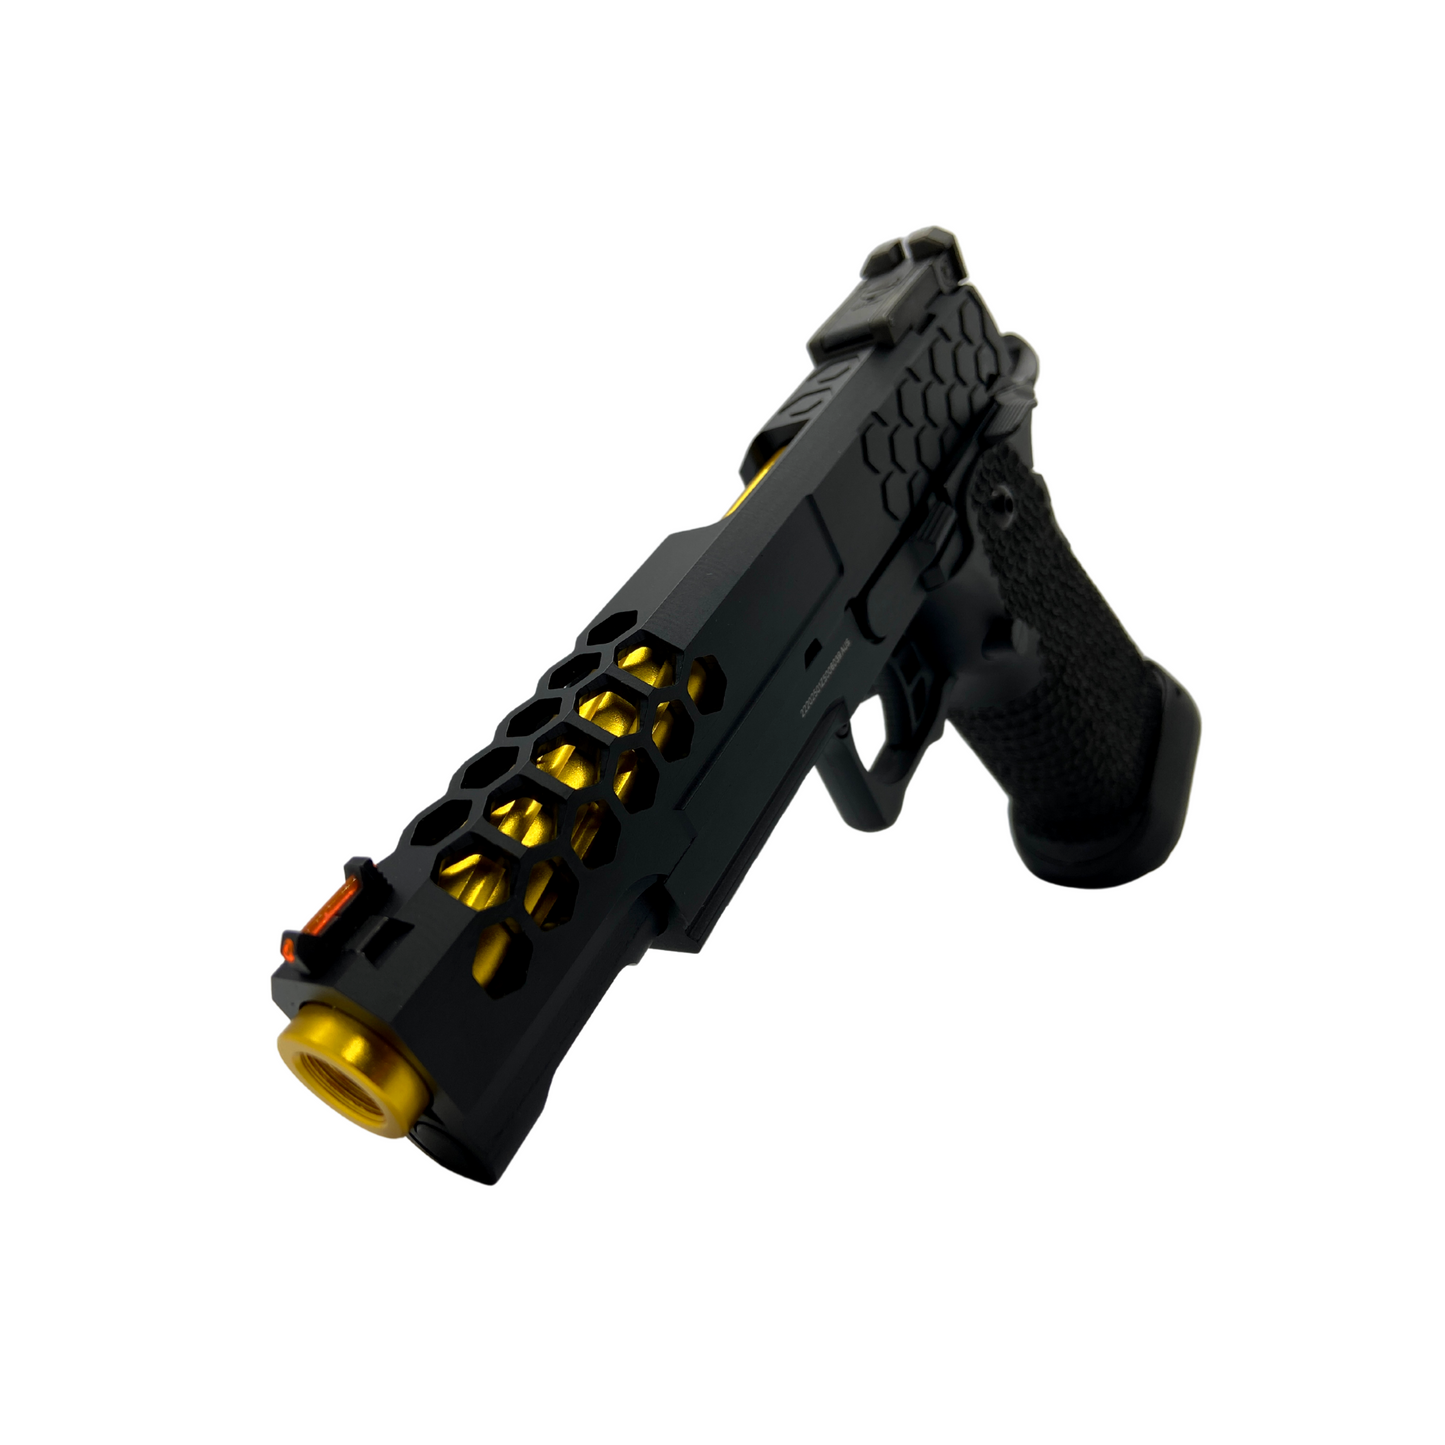 Golden Eagle G3399 Hi-Capa Hex Gas Pistol - Gel Blaster